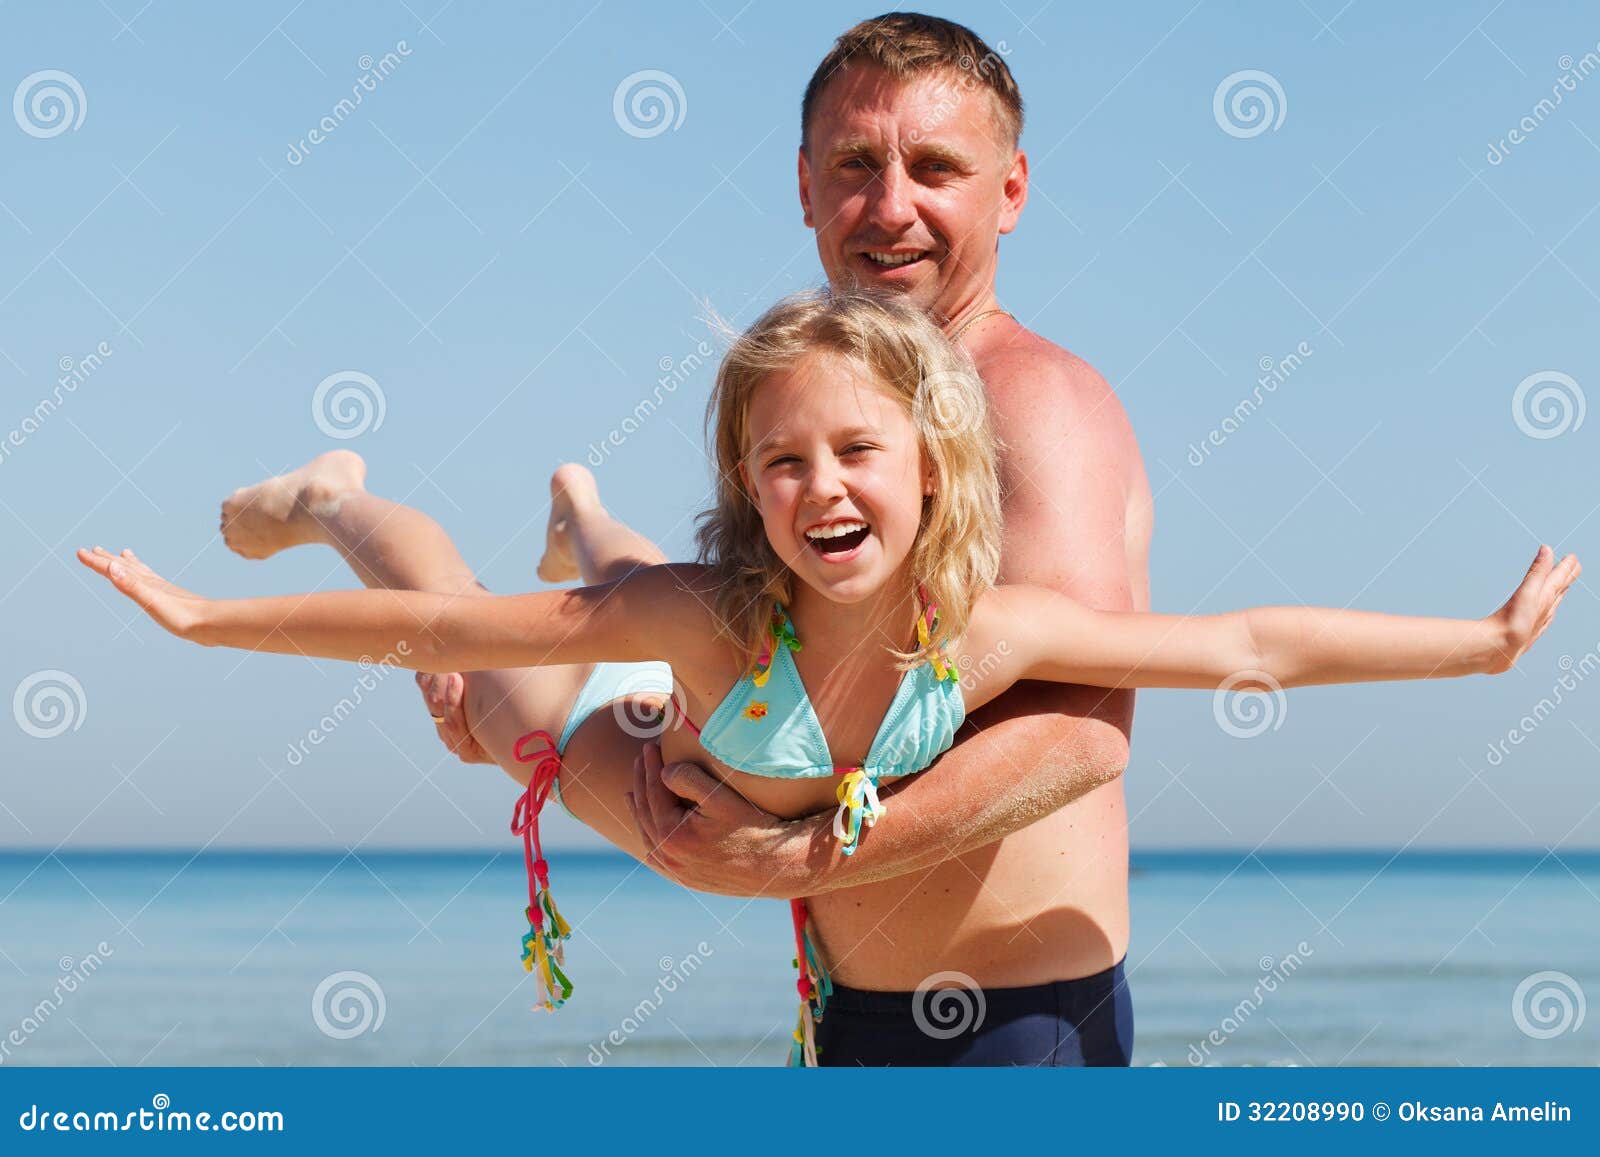 Dad daughter nude beach